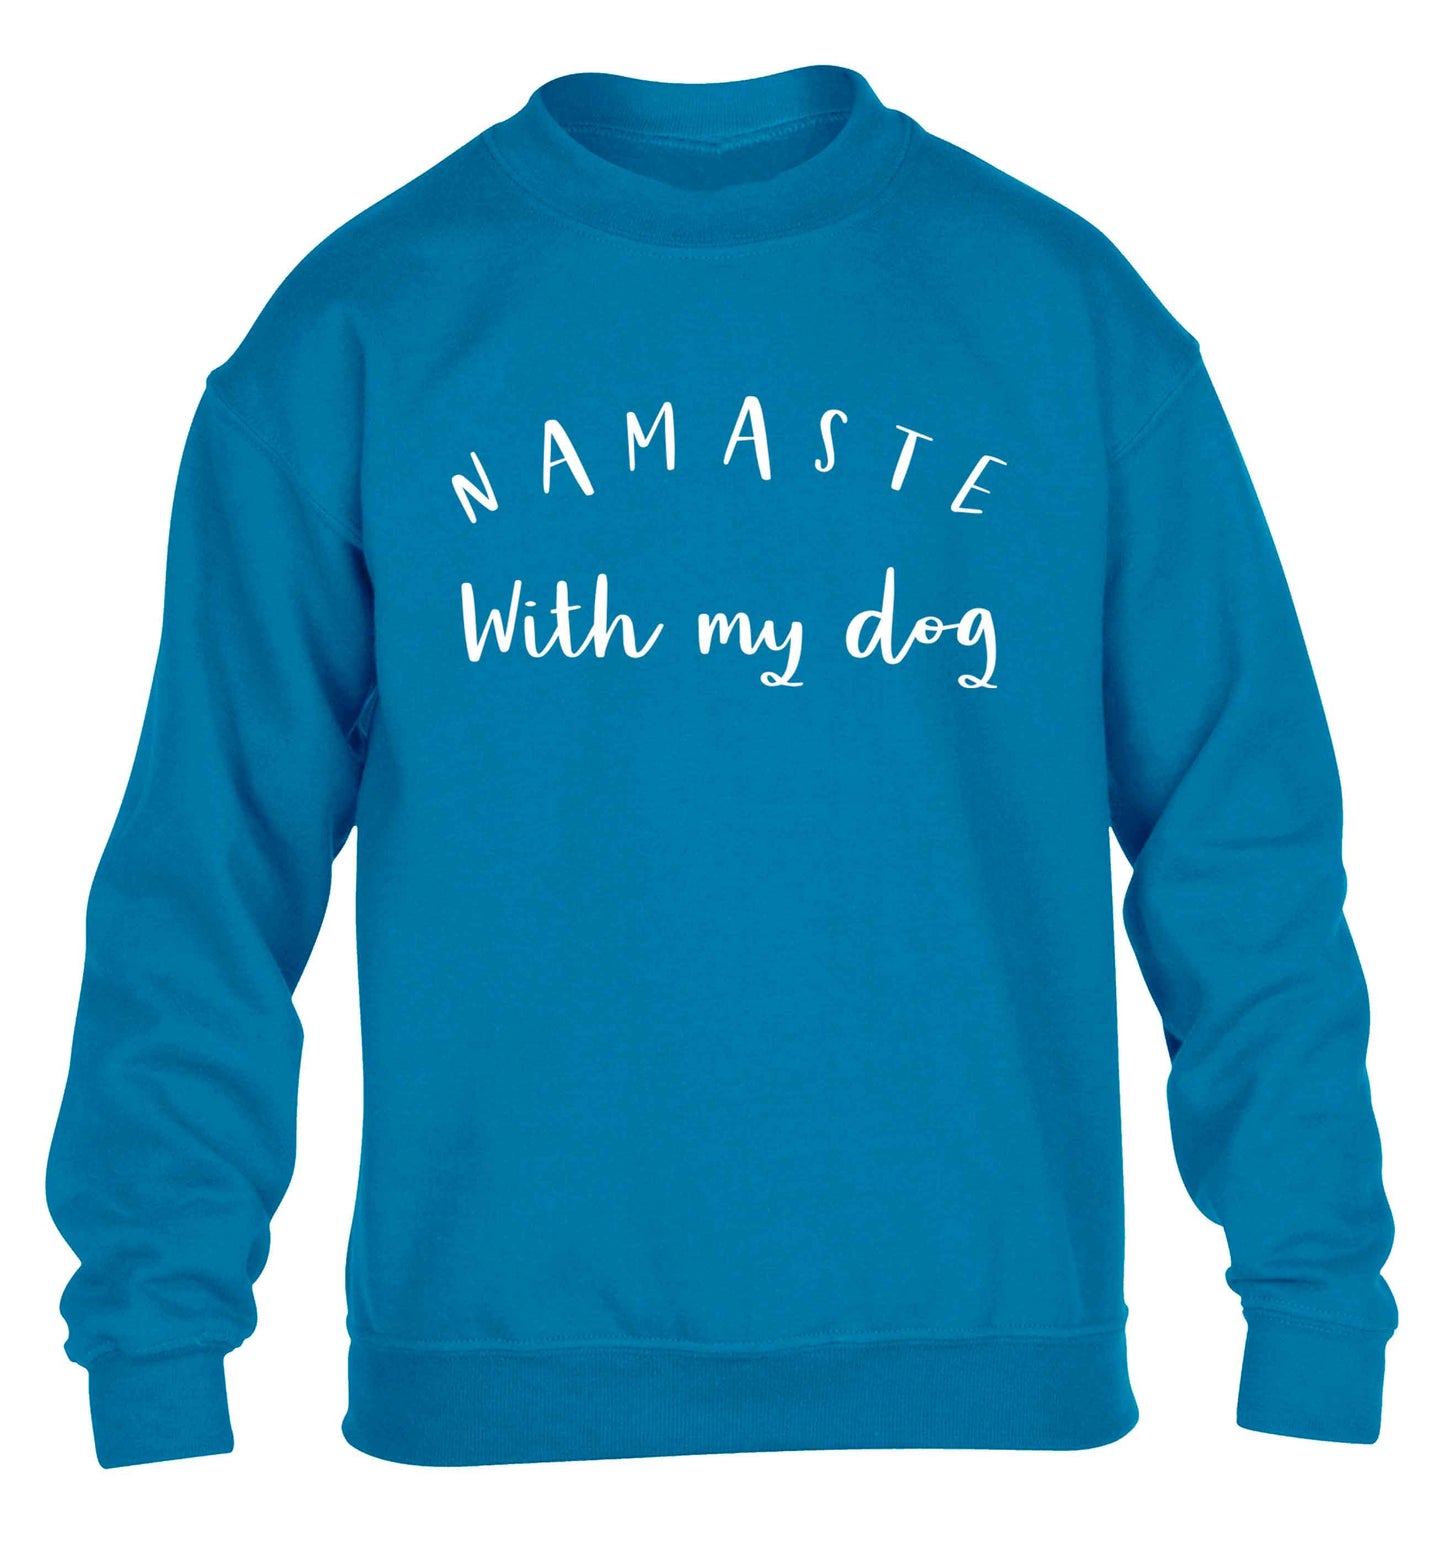 Namaste with my dog children's blue sweater 12-13 Years